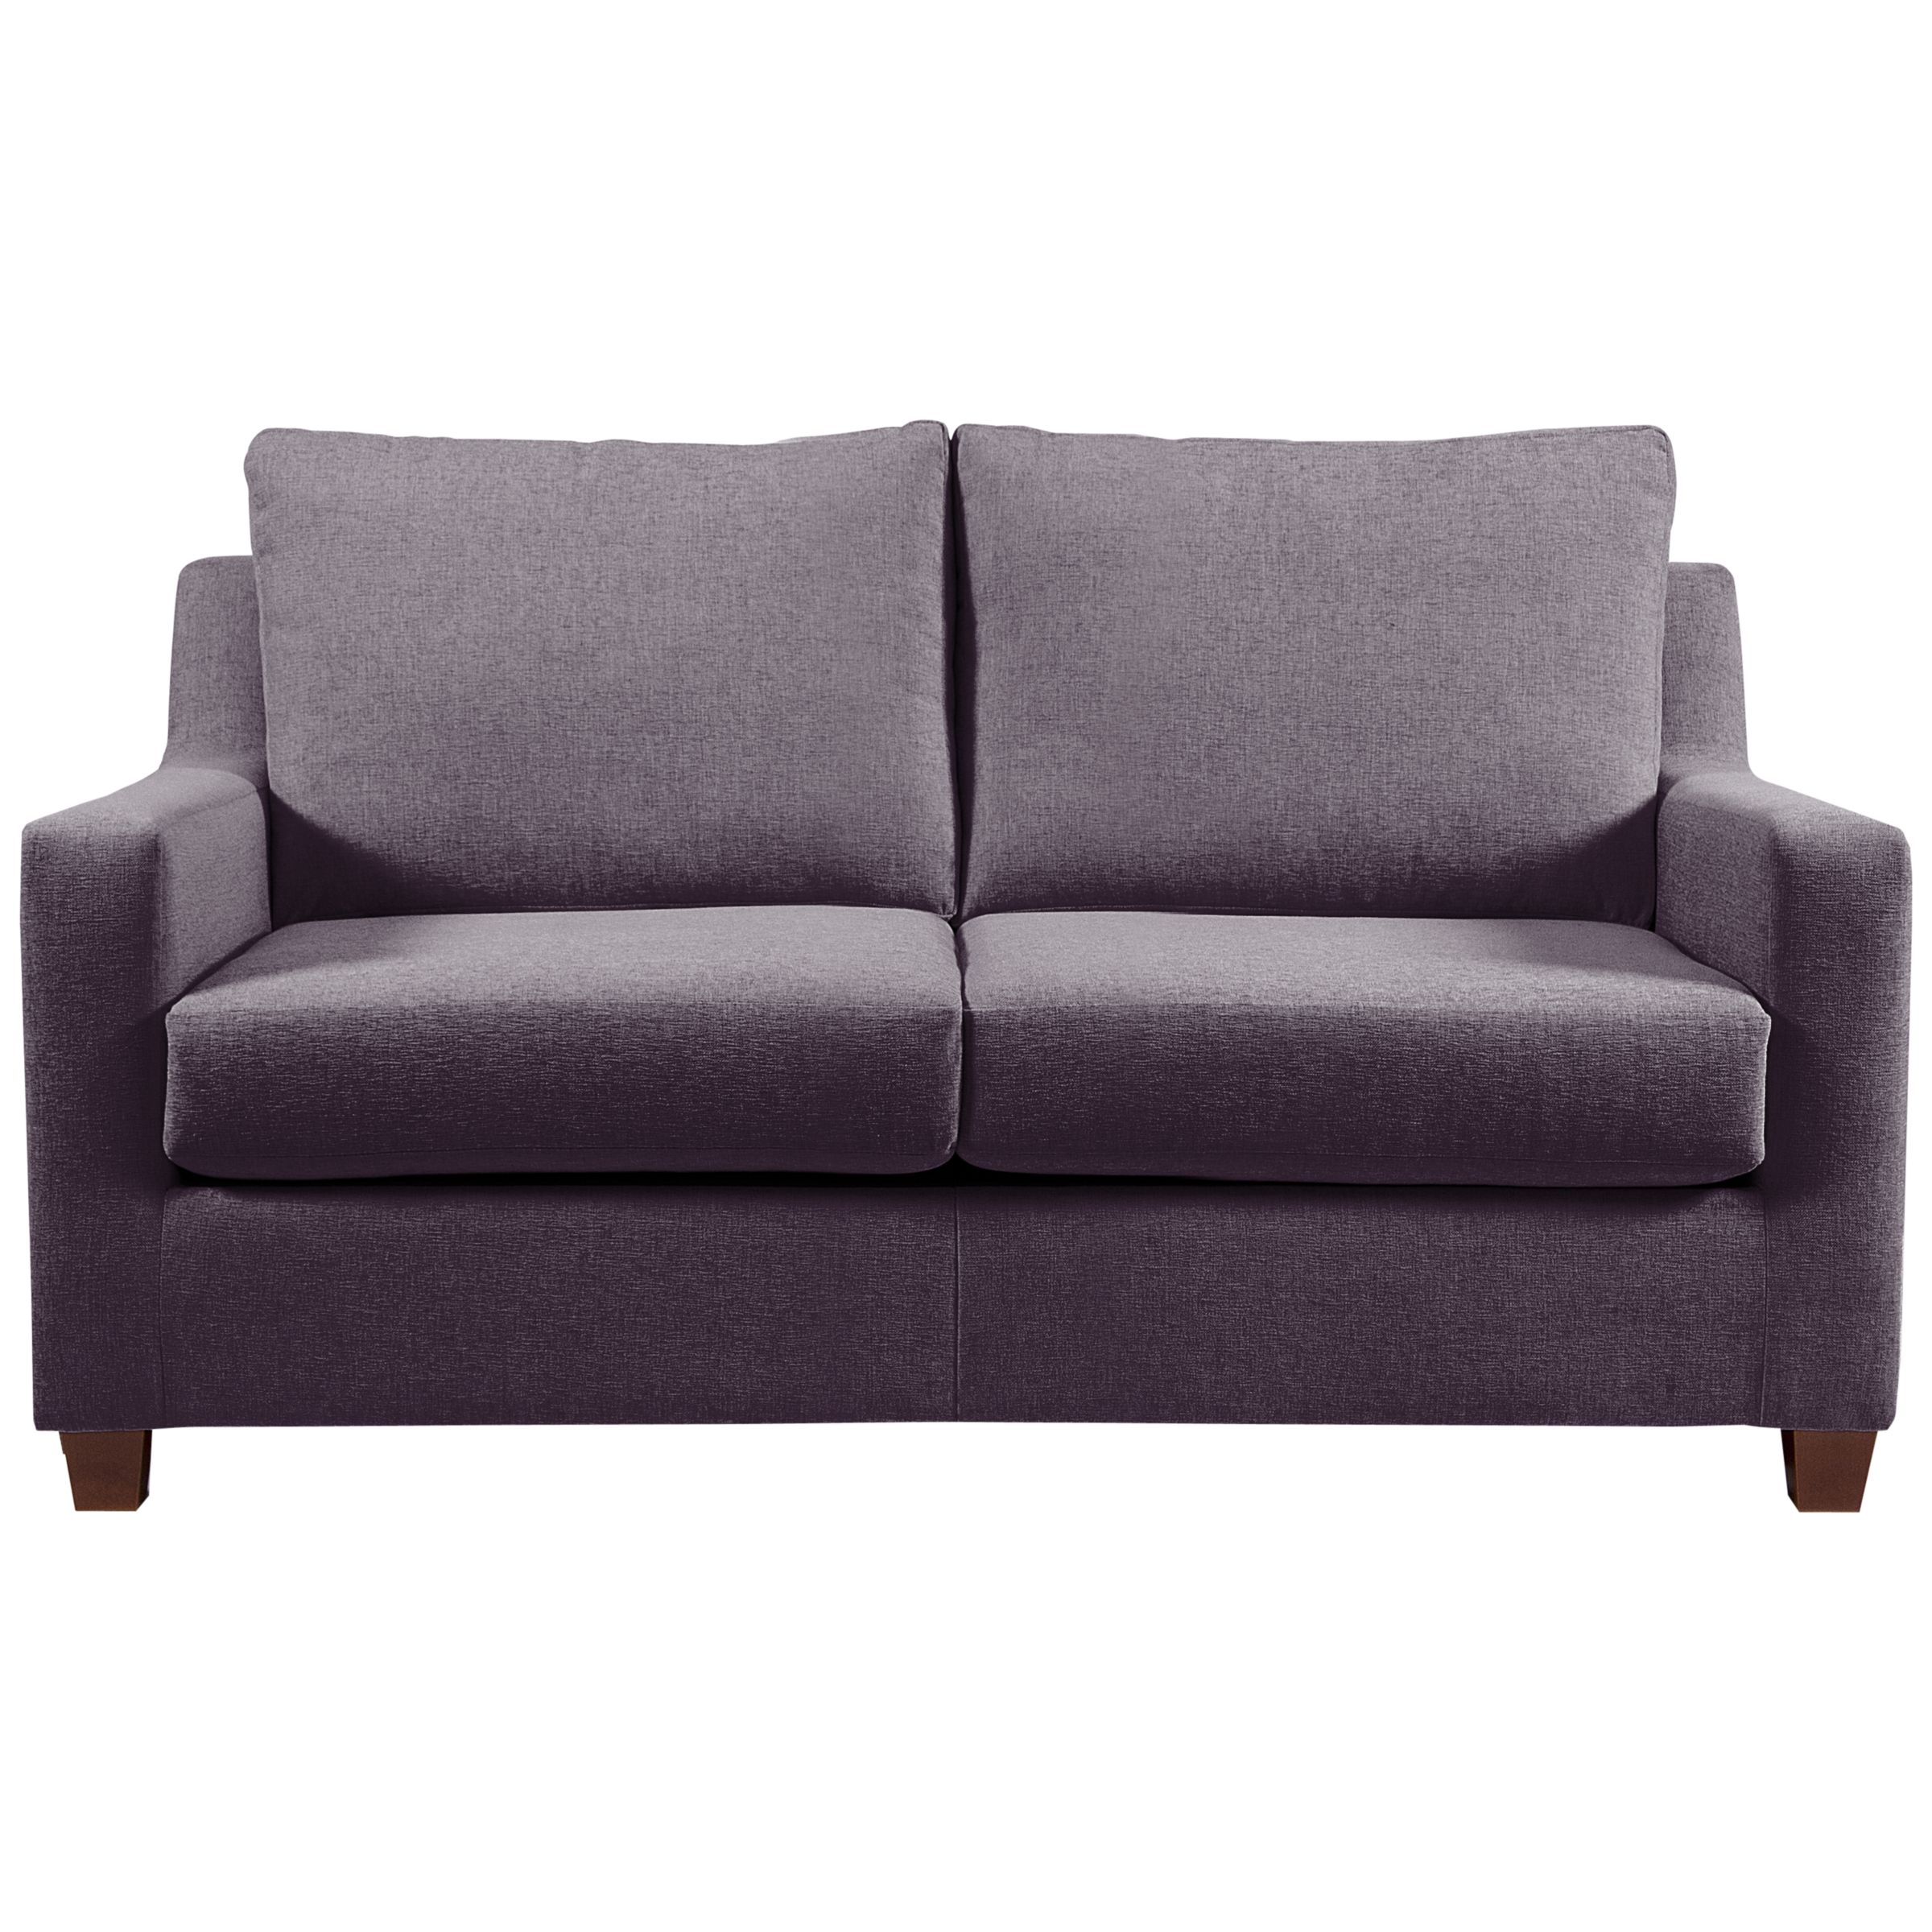 John Lewis Bizet Small Sofa Bed with Pocket Sprung Mattress, Purple, width 158cm